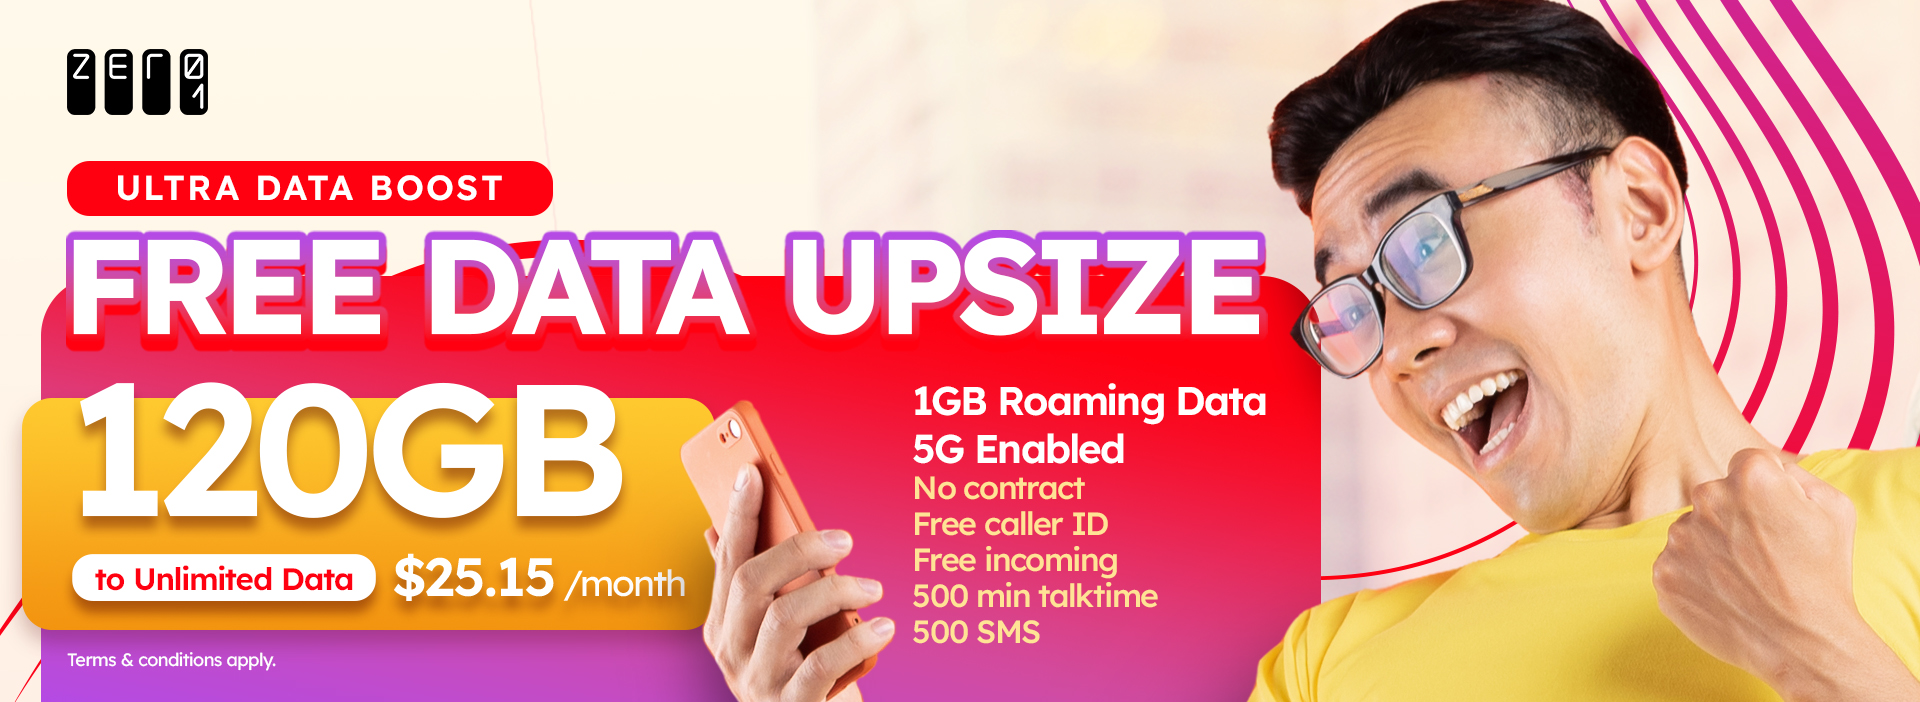 Ultra Data Boost - Zero1 60u 5G Mobile Plan - 120GB - Banner